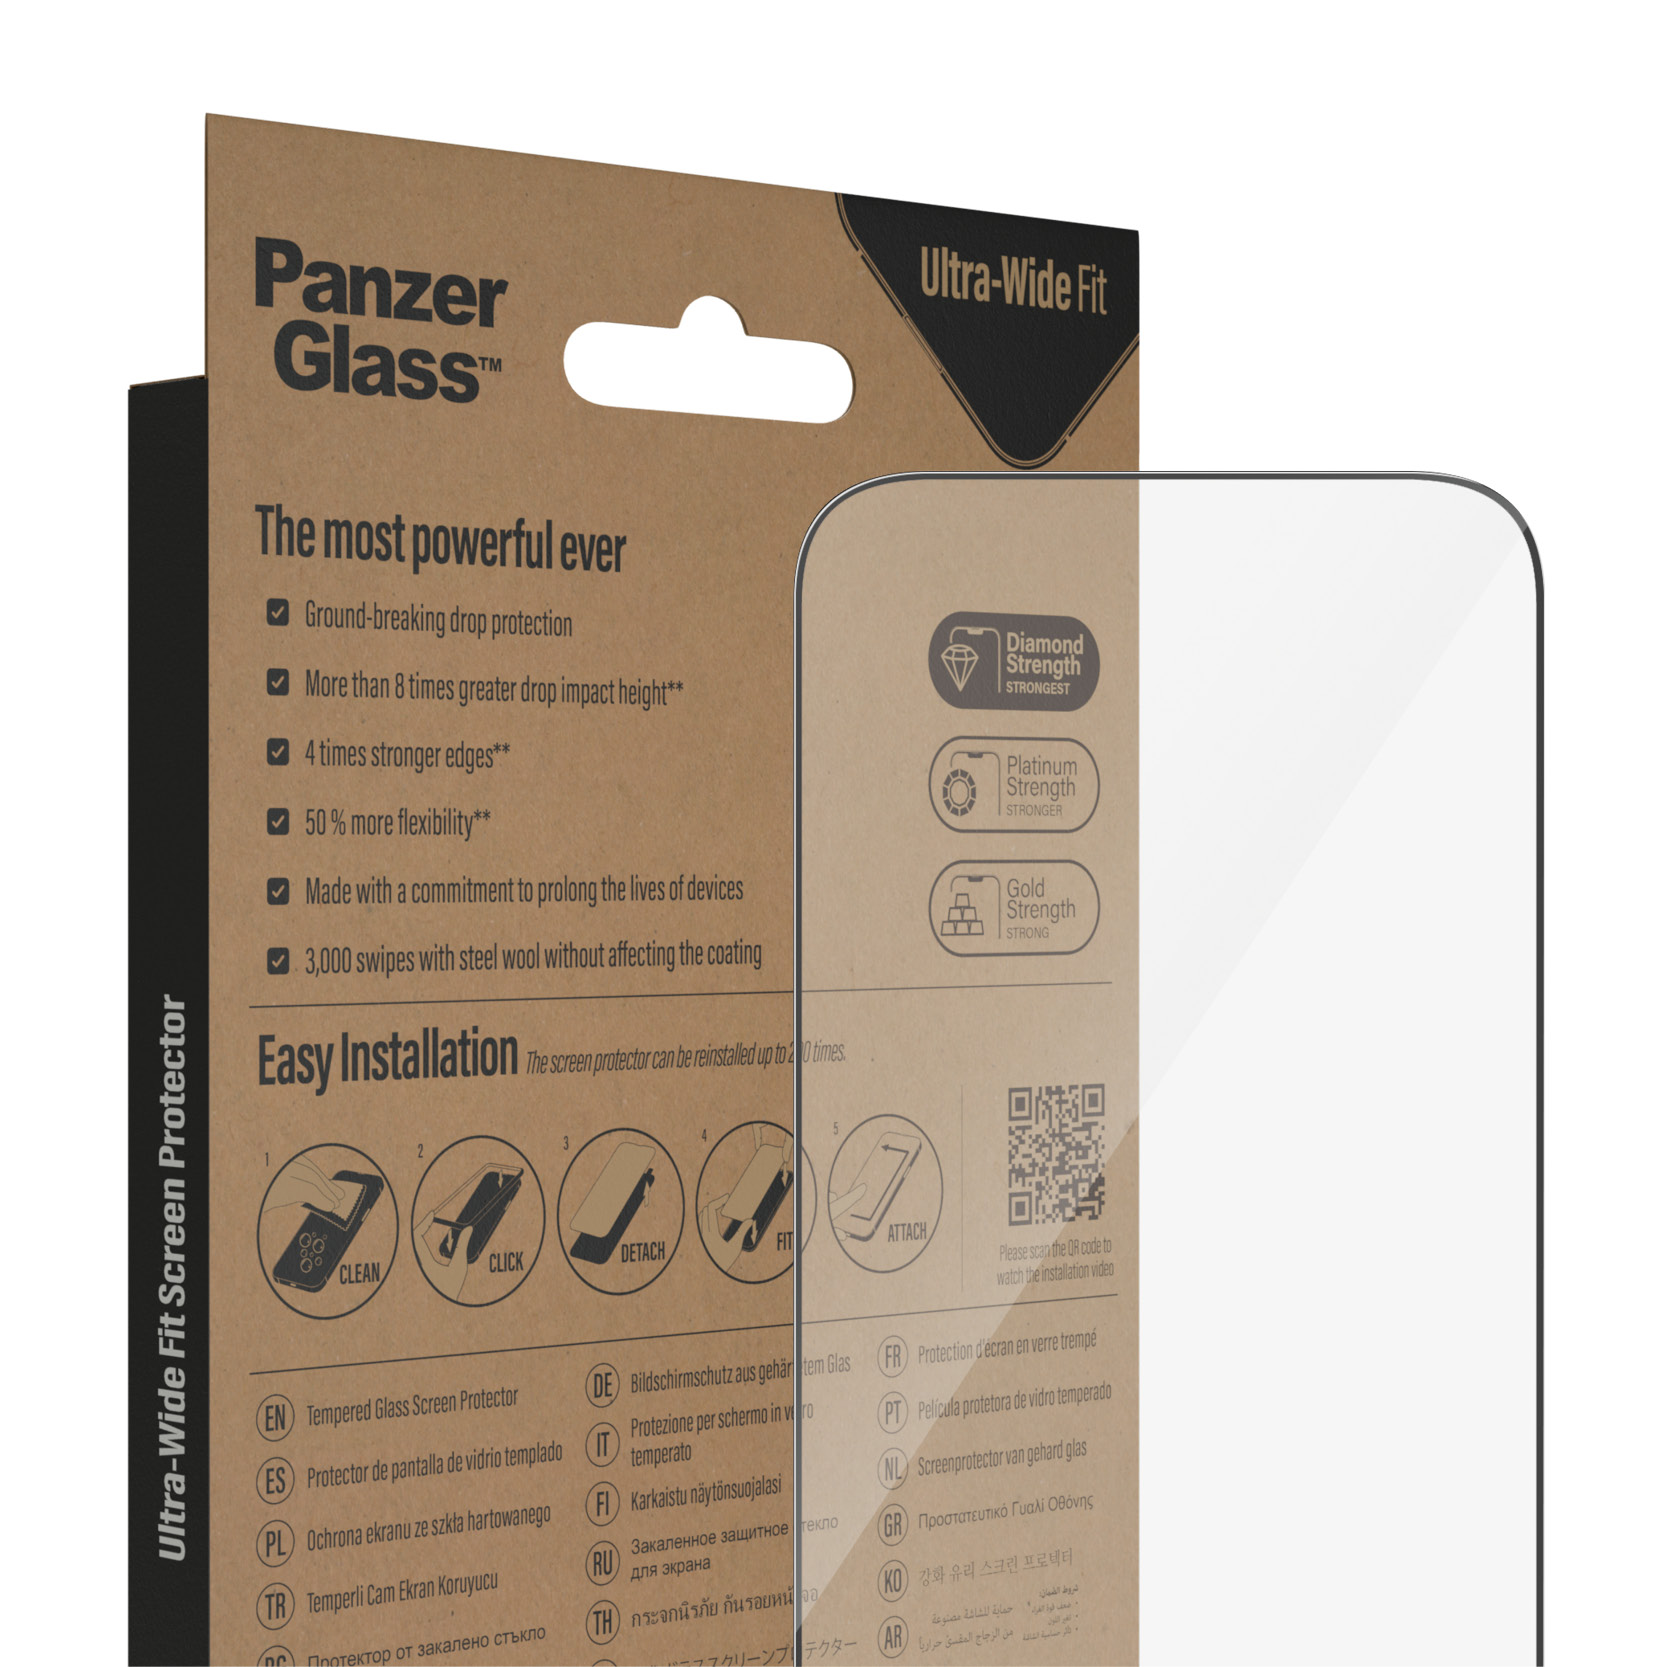 Protector de ecran PanzerGlass Apple iPhone 14 Pro | Potrivire ultra-larga cu. EasyAligner thumb